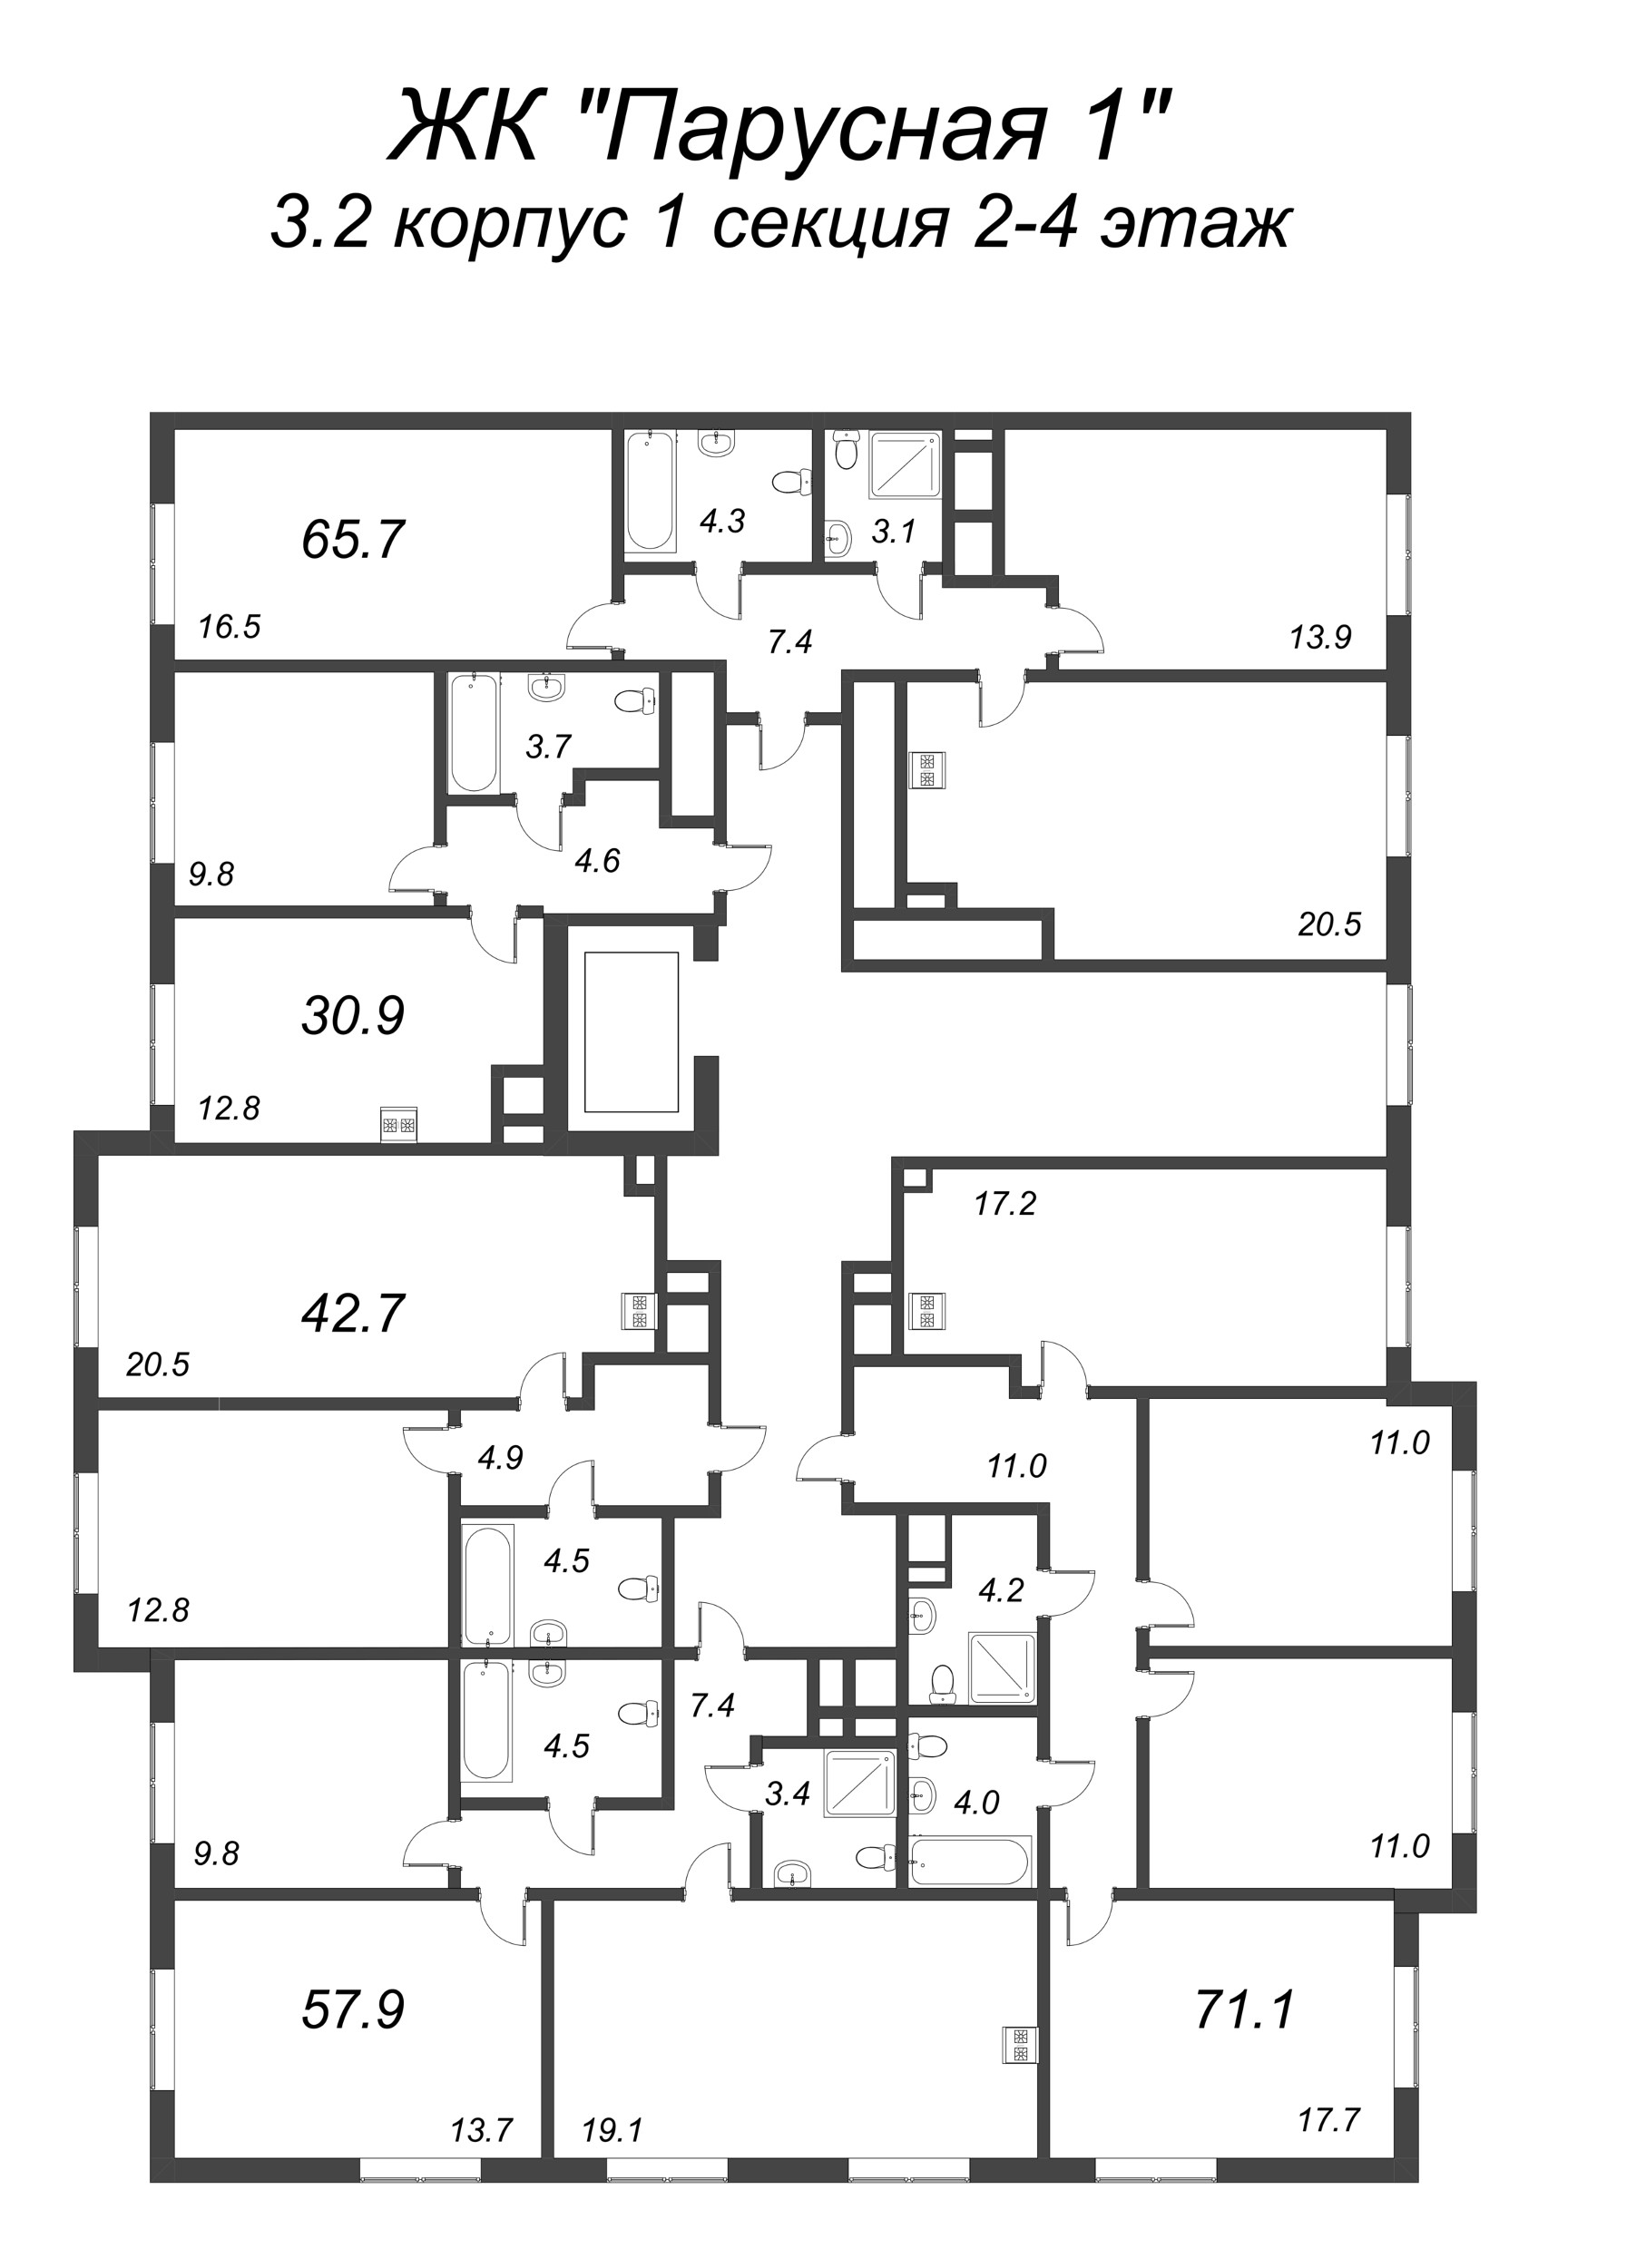 4-комнатная (Евро) квартира, 71.1 м² - планировка этажа